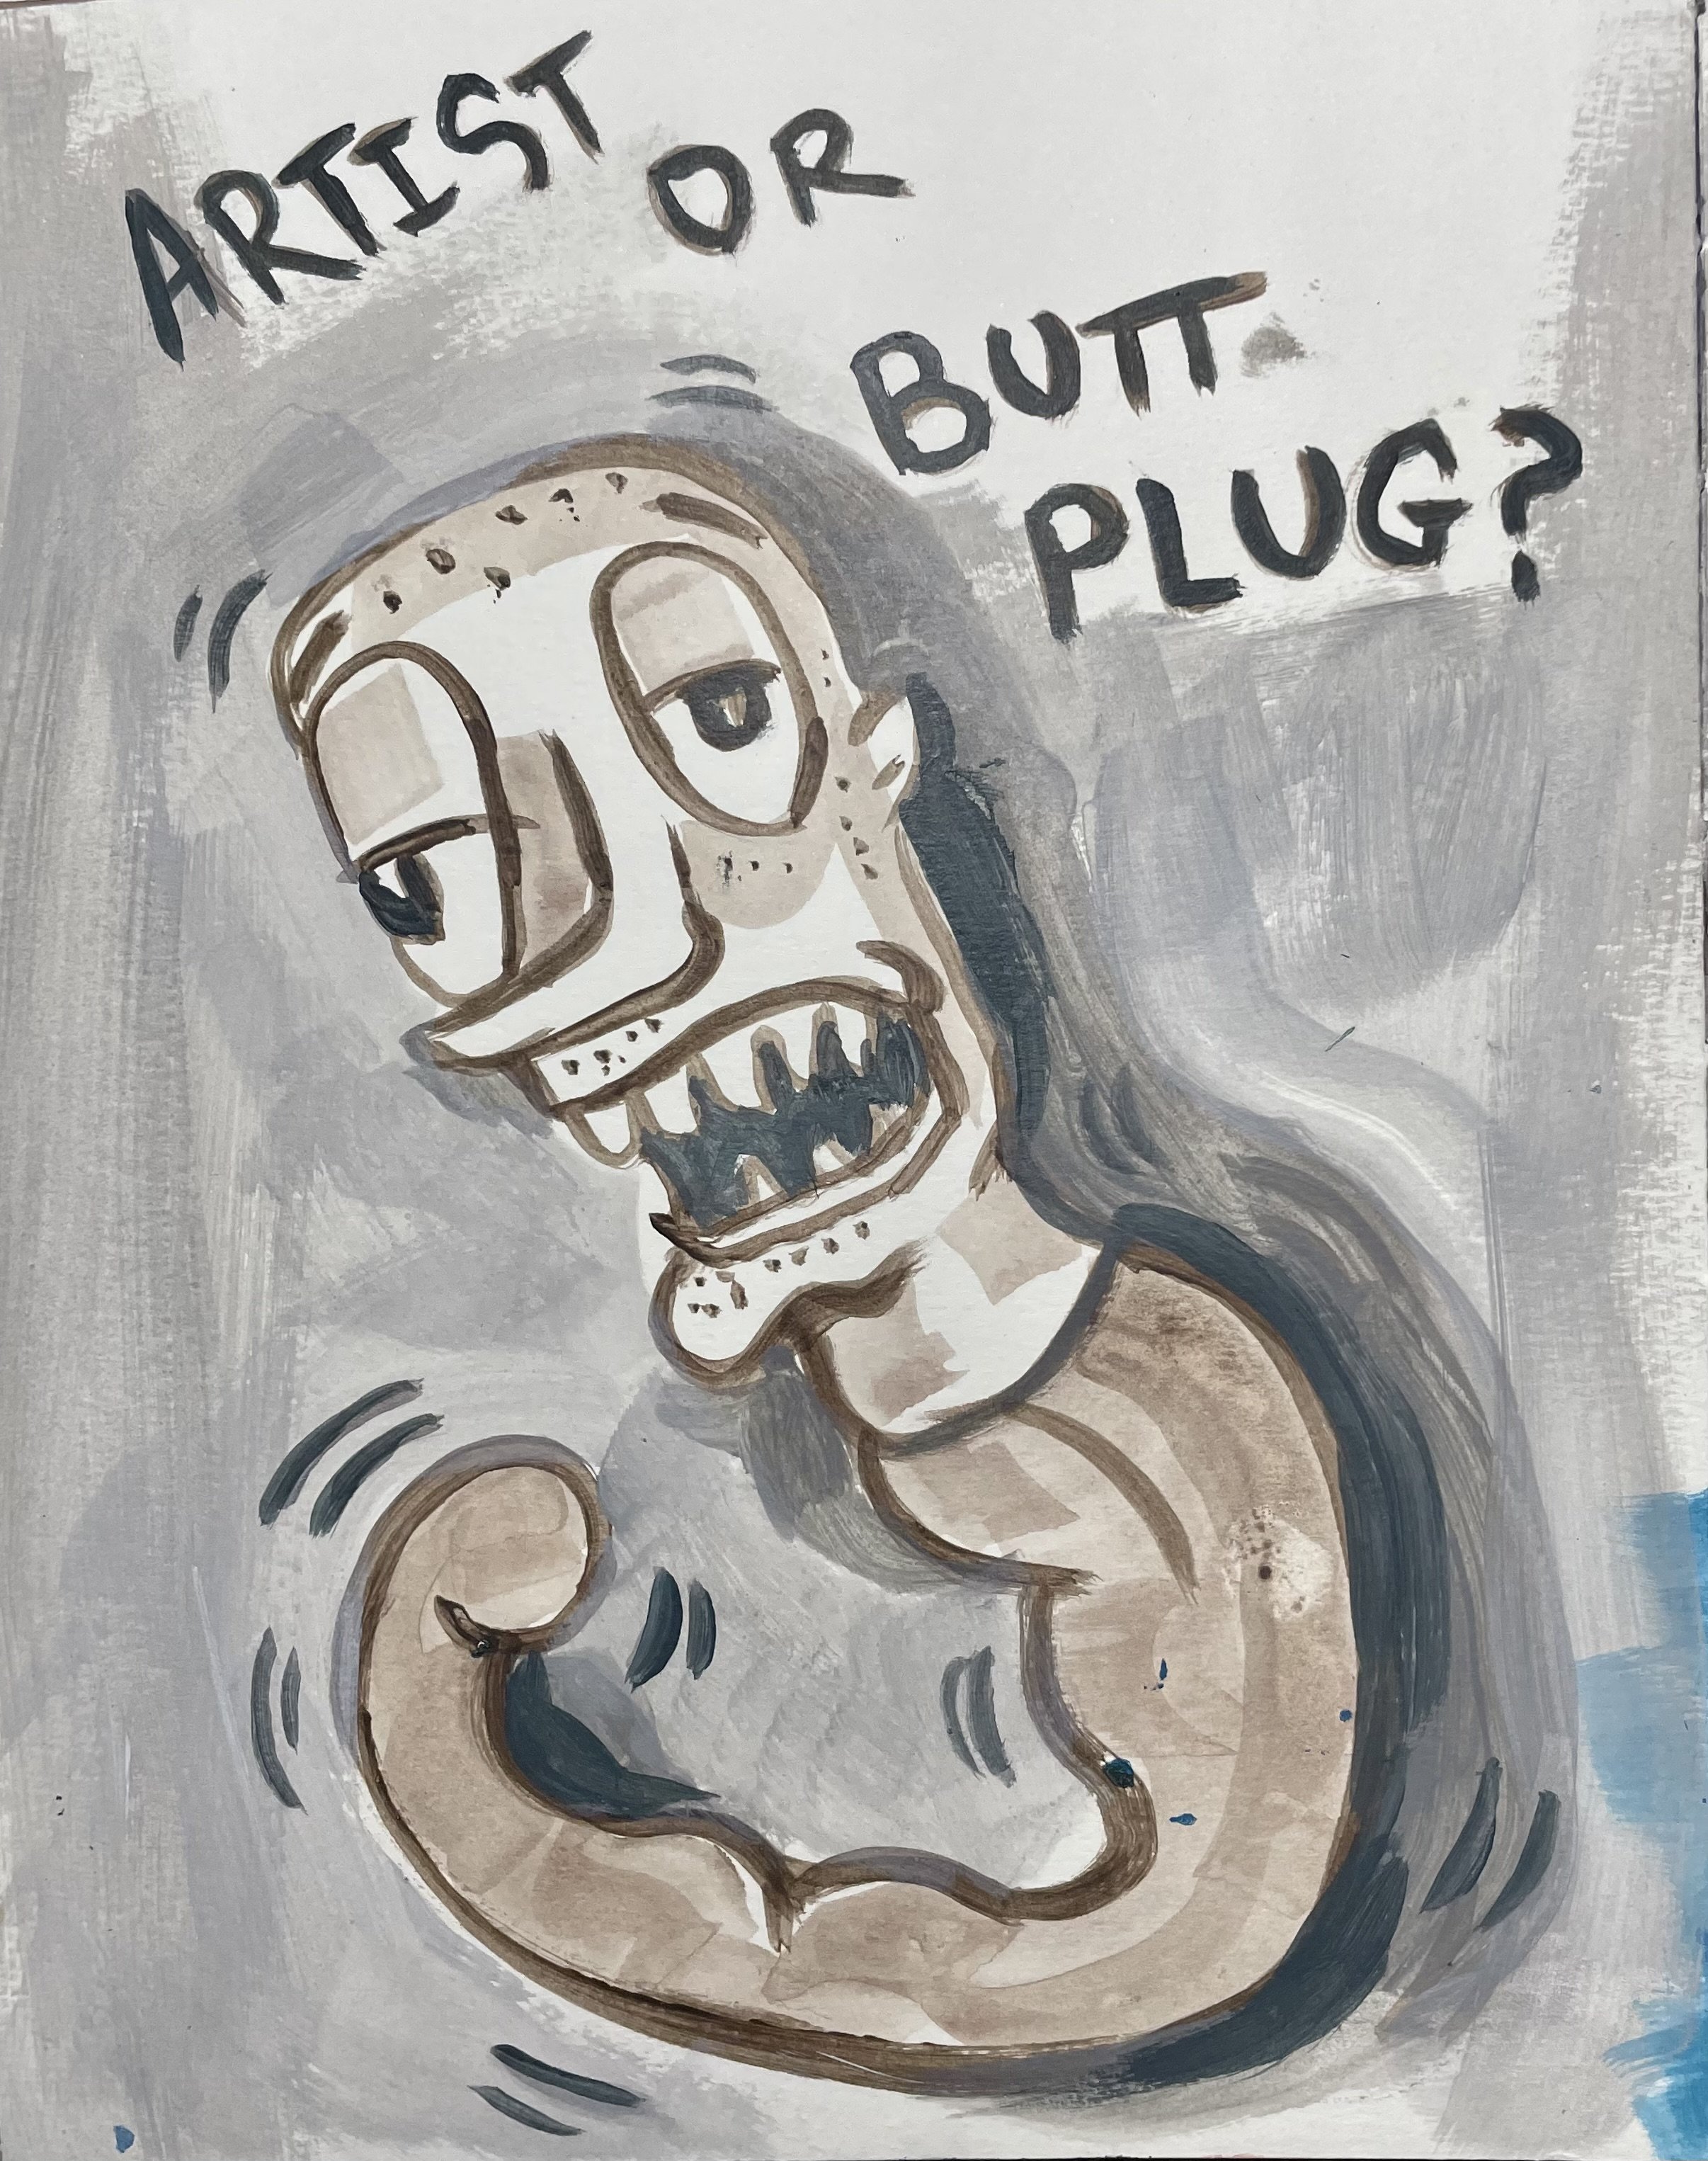 Artist or Butt-Plug?